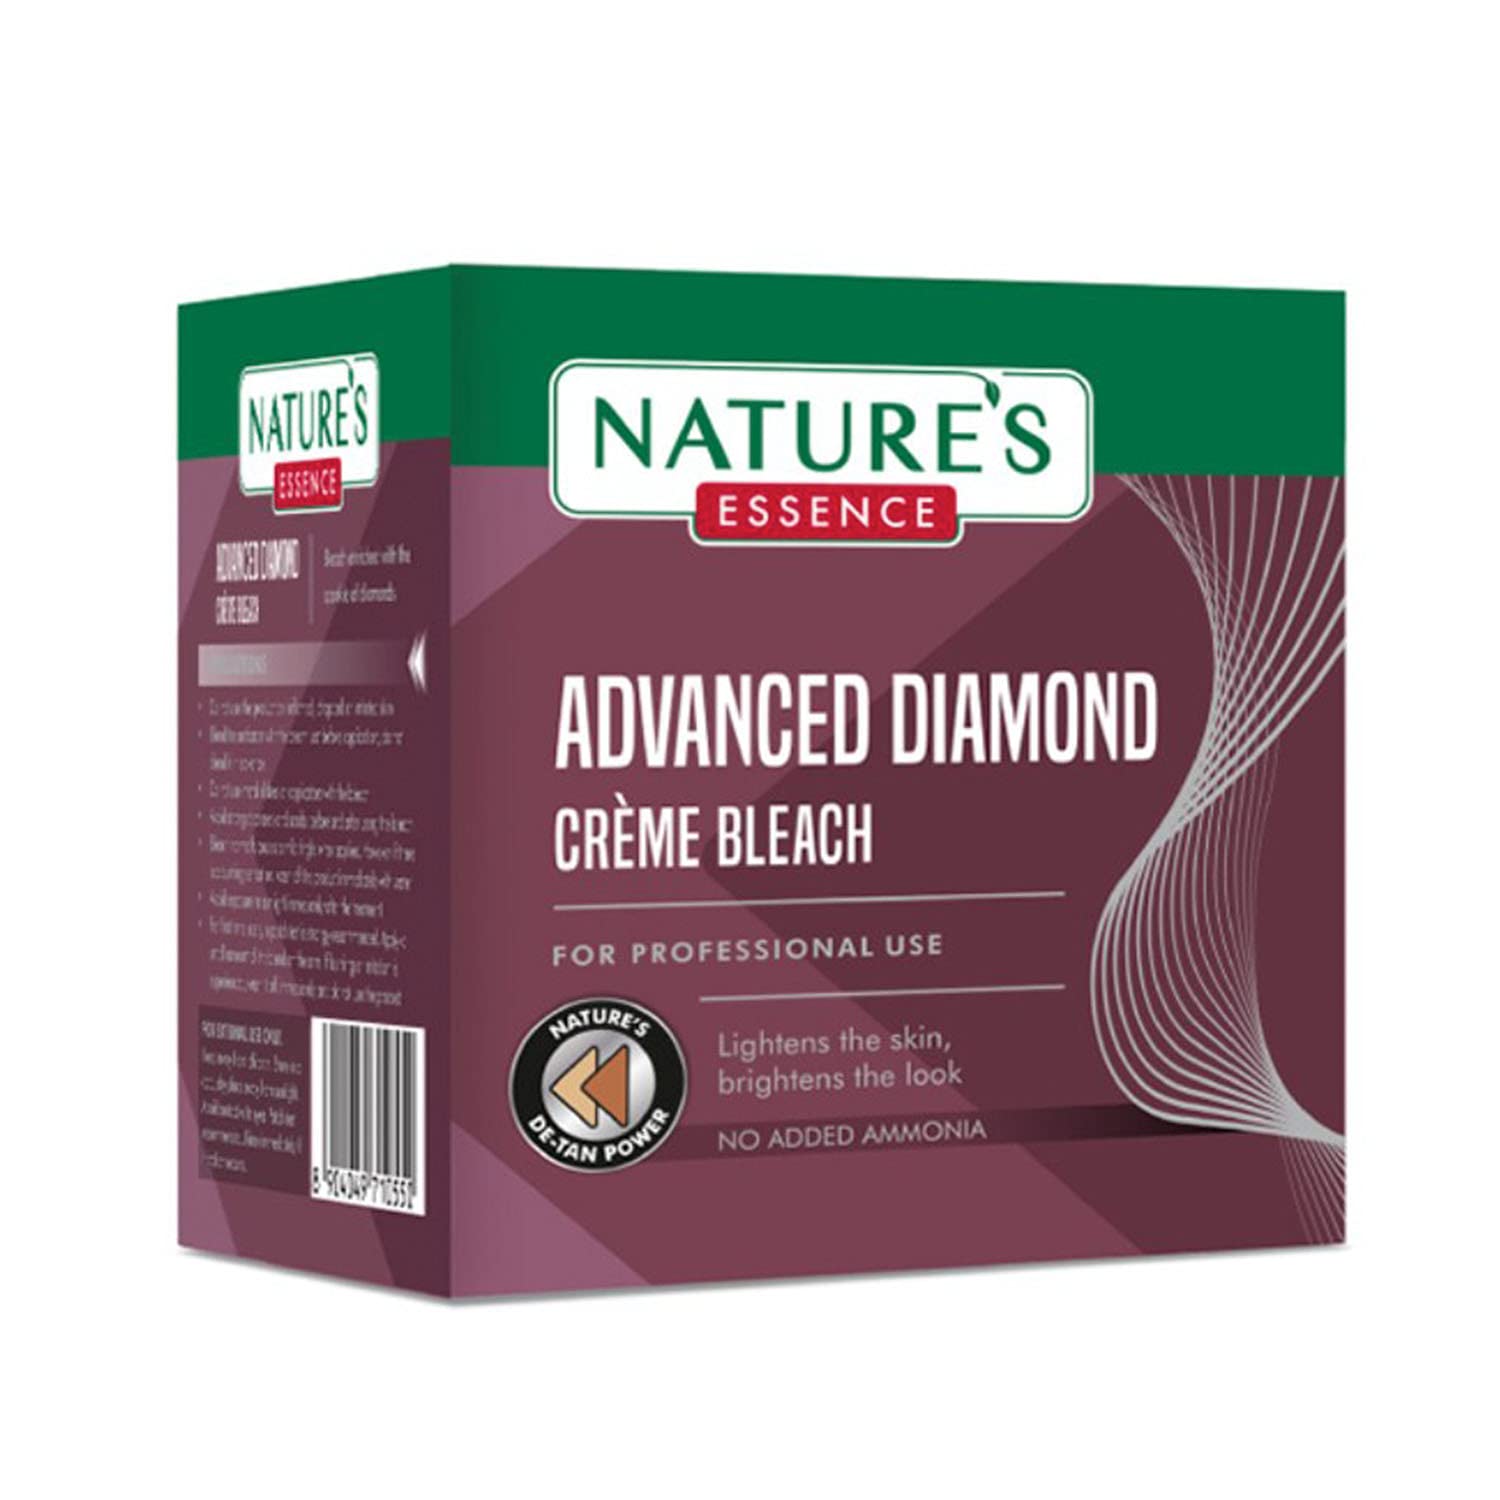 NATURE'S ESSENCE Advanced Diamond Creme Bleach 525gm, White